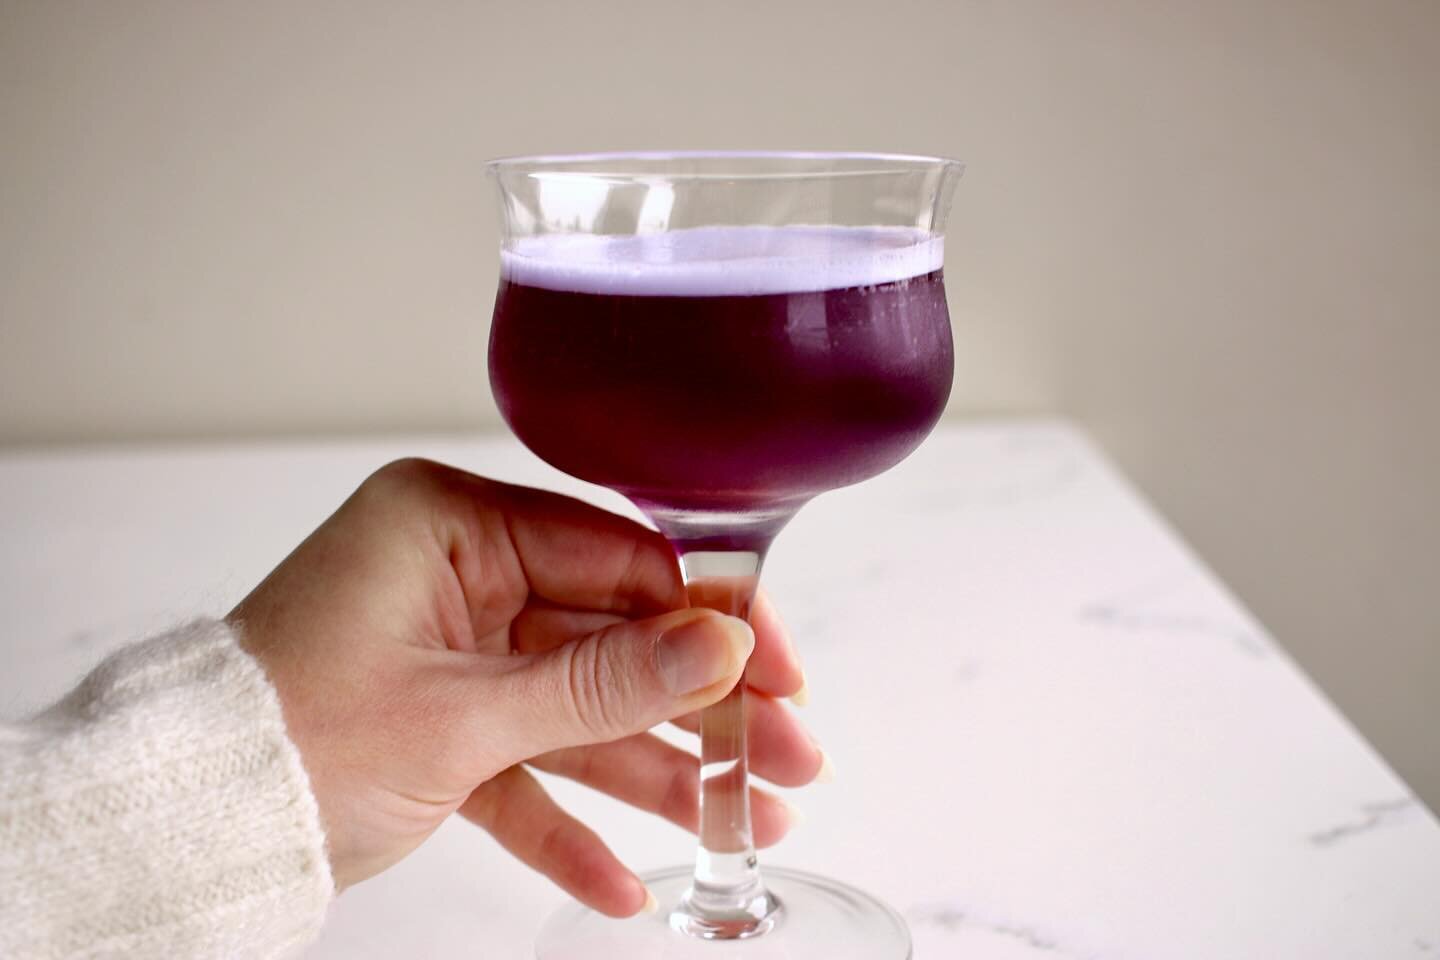 Swooning over this gorgeous purple cocktail!
SO FIVE YEARS AGO 🔮
vodka &bull; peaflower &bull; clarified pineapple &bull; five spice

#pnwonderland #spokanewashington #spokanedoesntsuck #spokane #vegancocktails #craftcocktails